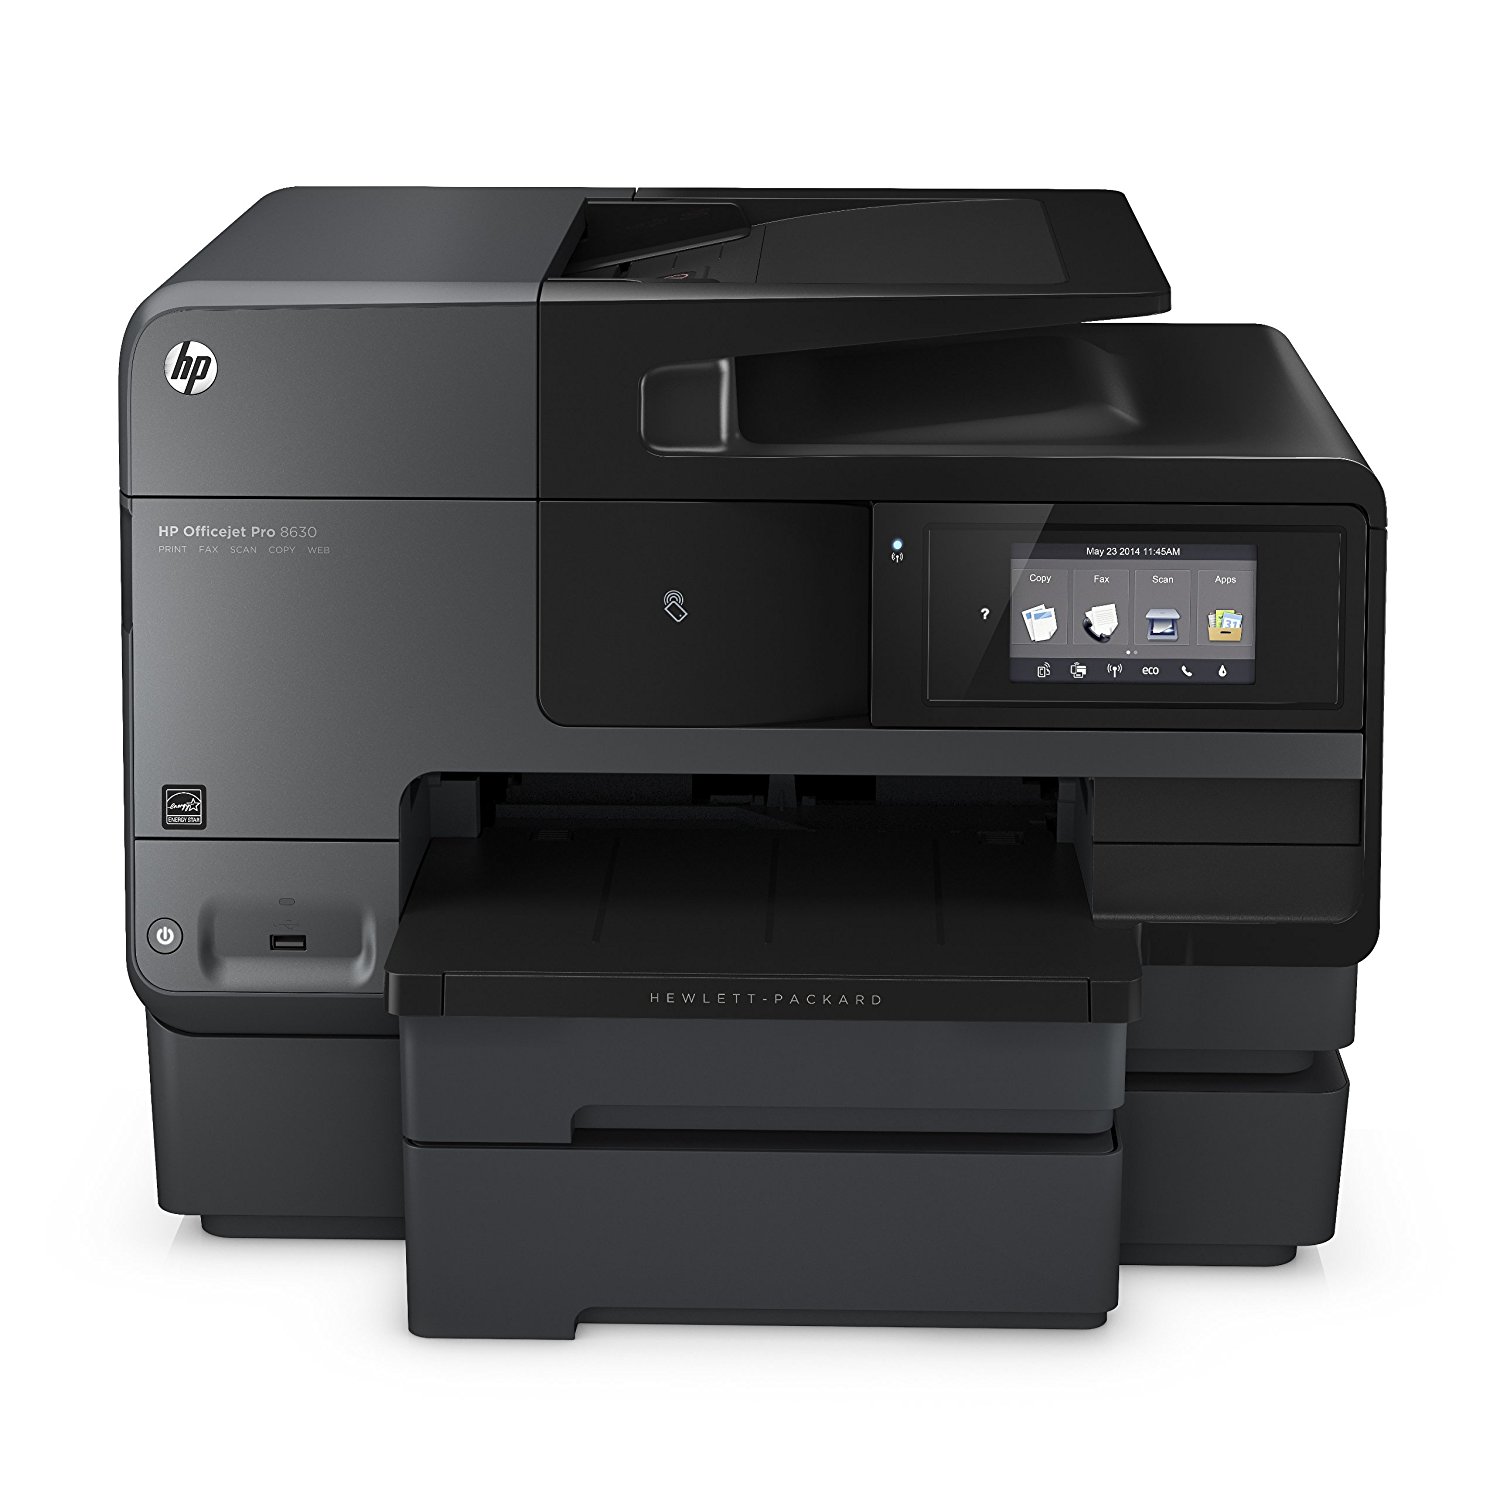 8. HP Office Jet Pro 8630 Printer